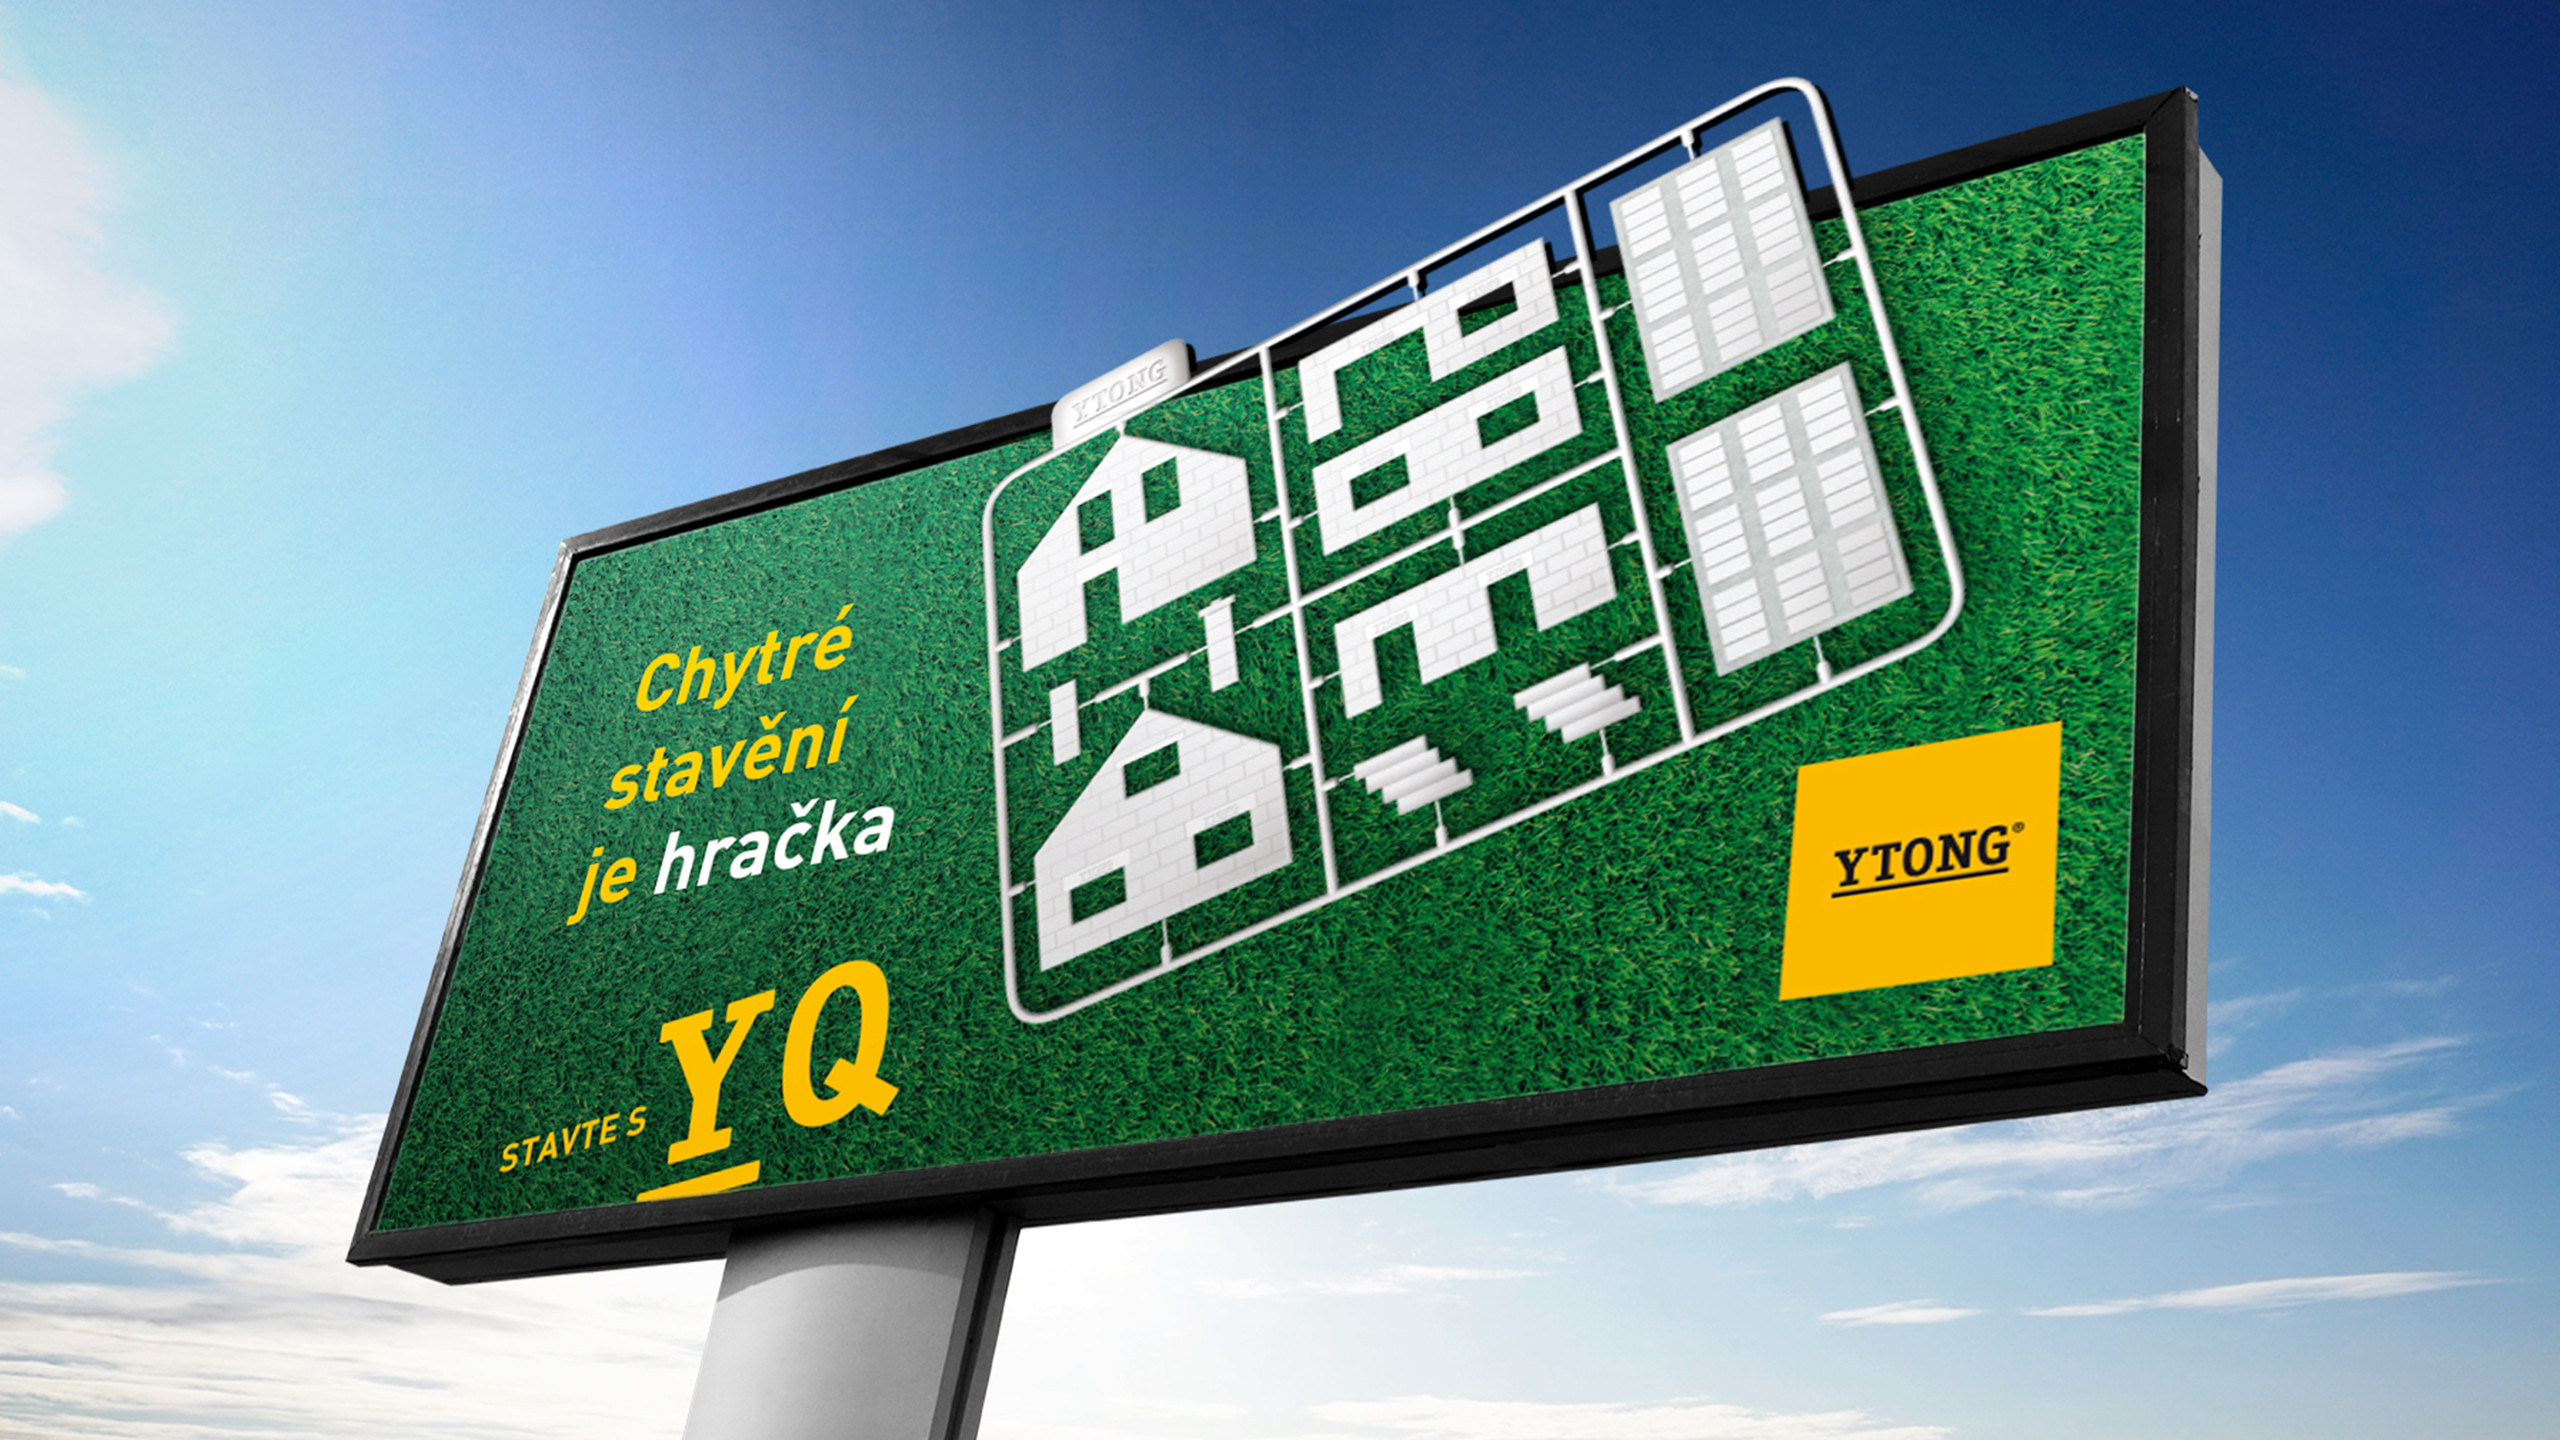 Ytong – Communication Campaign Development